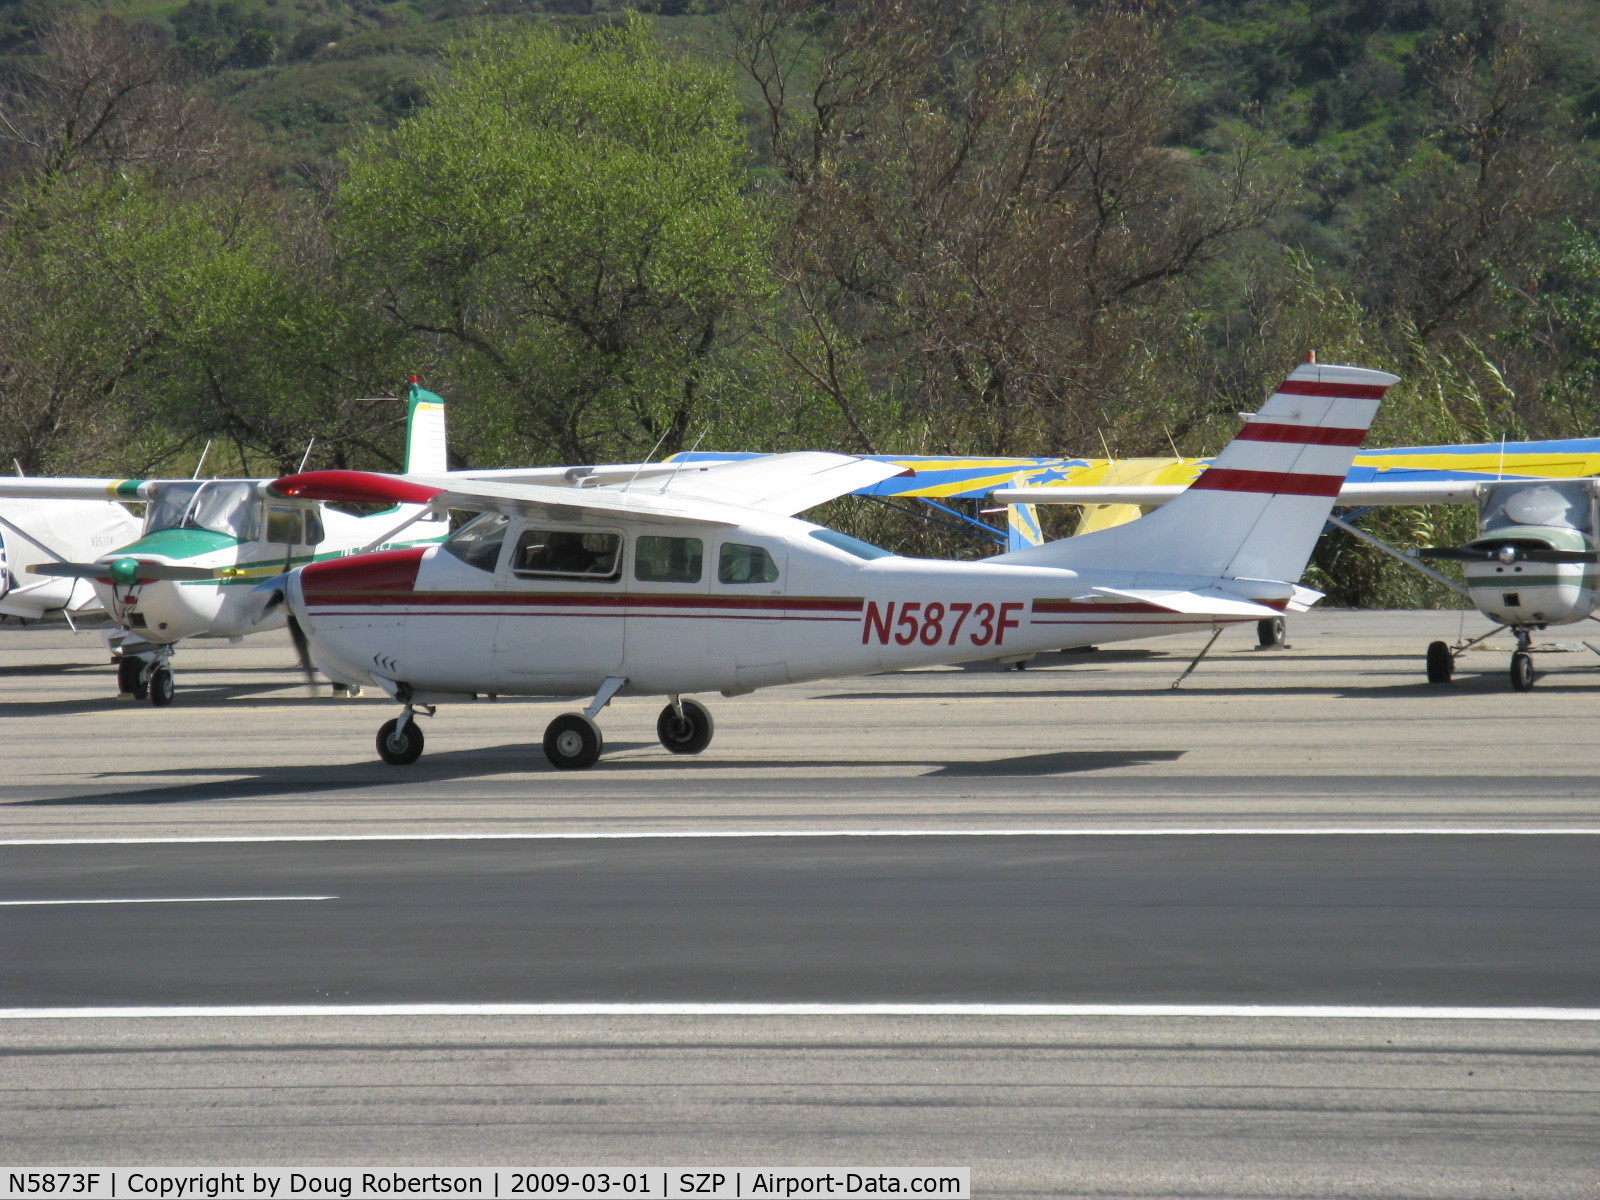 N5873F, 1967 Cessna 210G Centurion C/N 21058873, 1967 Cessna 210G CENTURION, Continental IO-520 285 Hp, taxi to Rwy 22